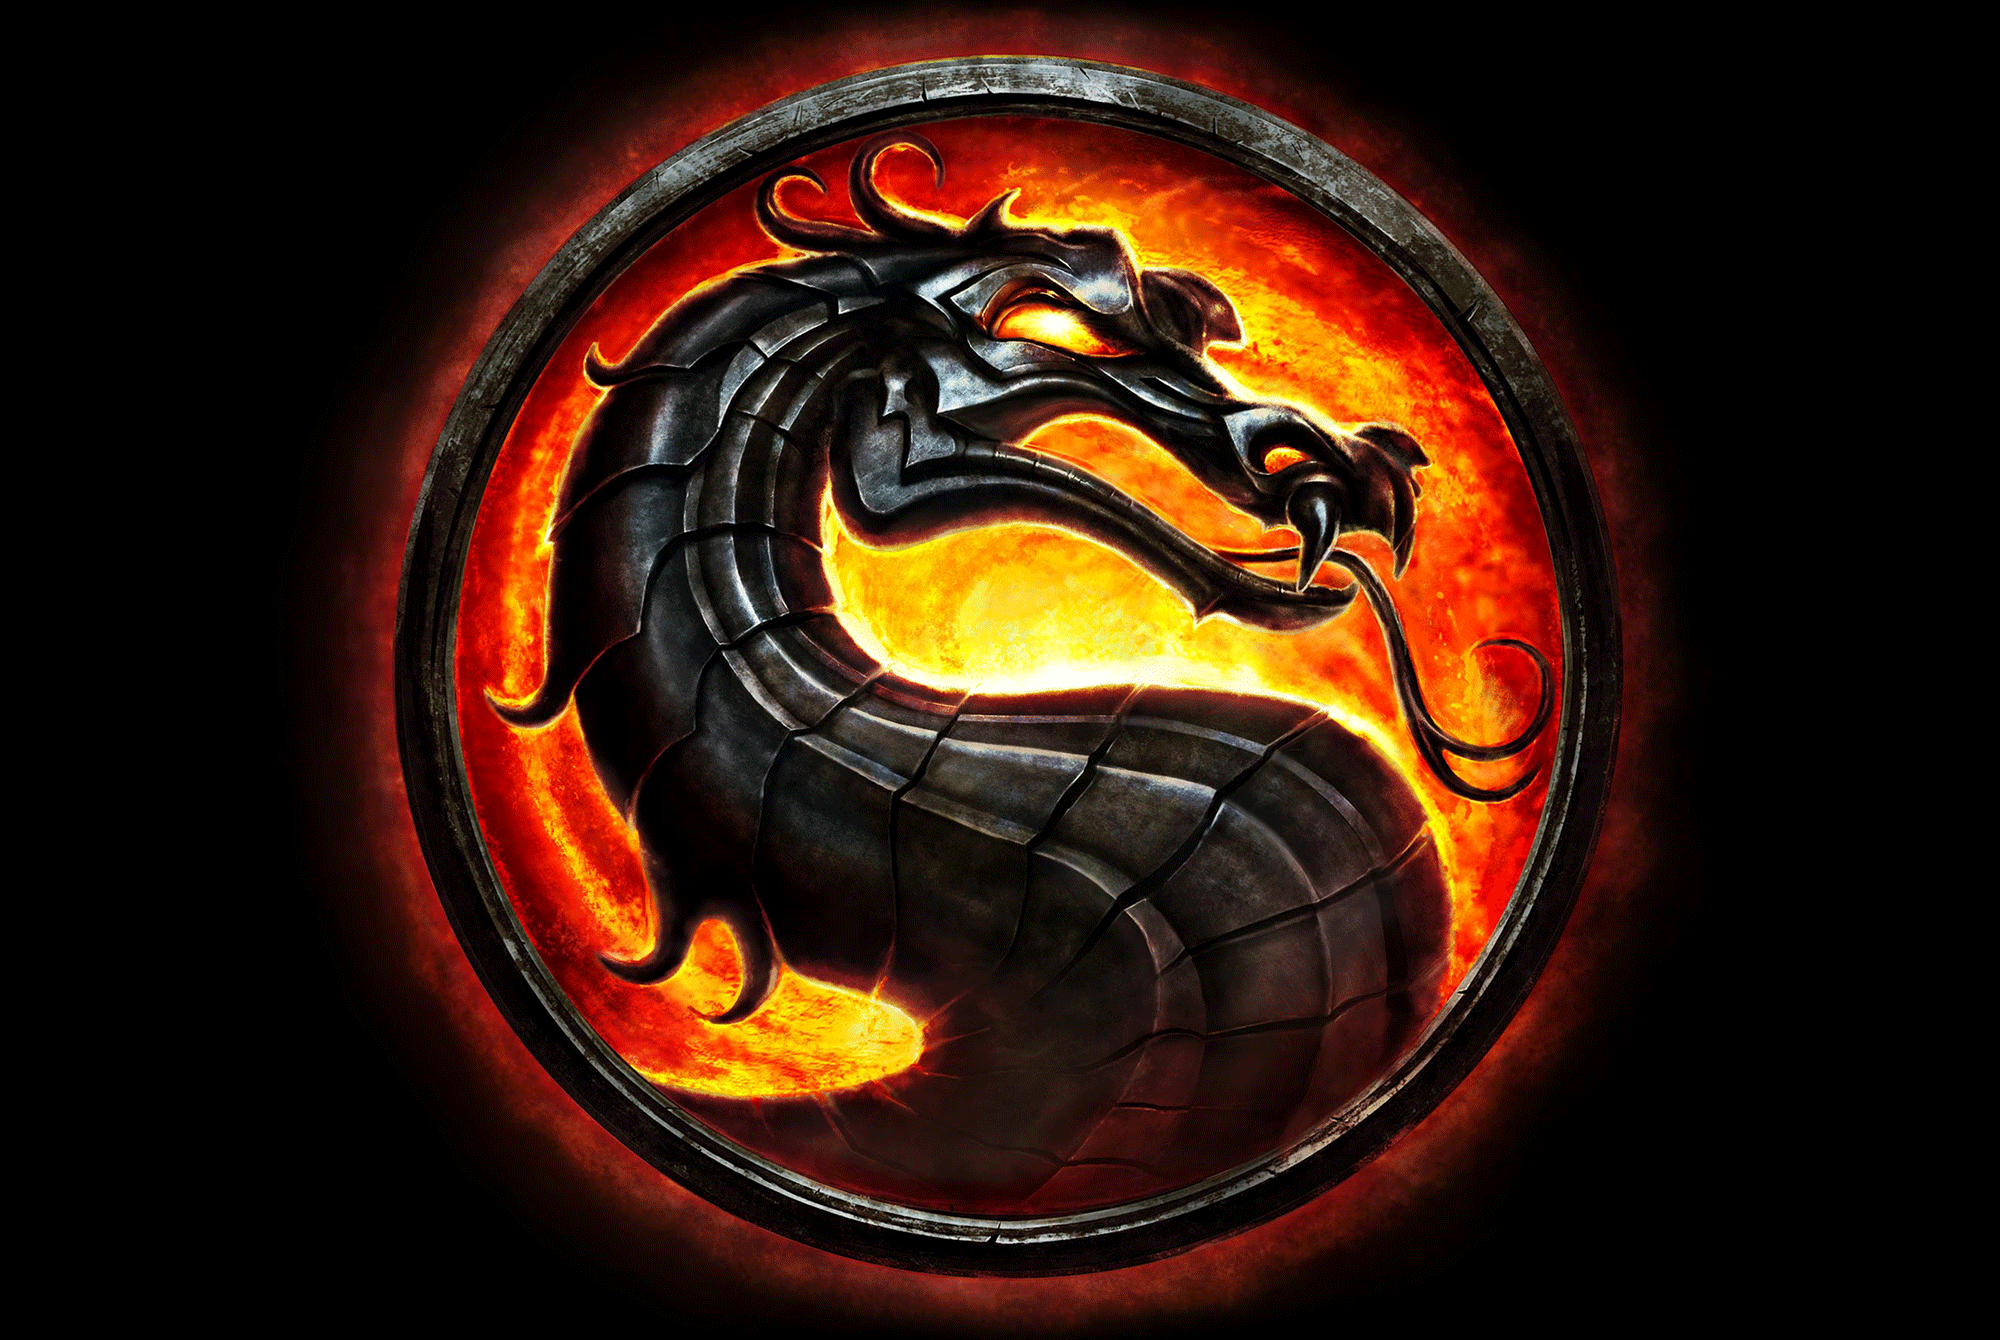 Cool Dragon Logo - Cool Dragon Logo. 223 best dragons images on pinterest in 2018 ...